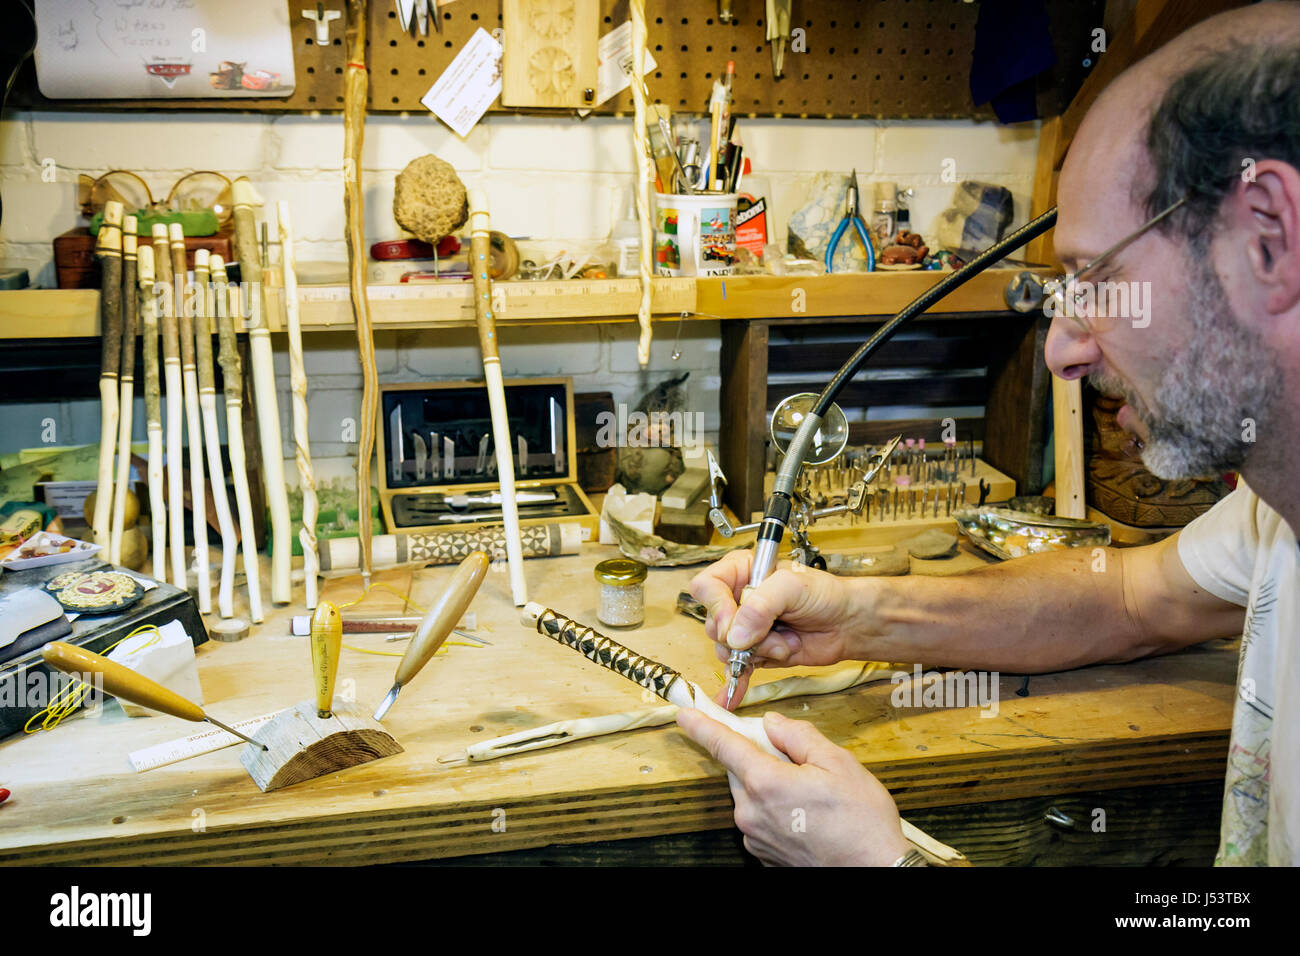 Arkansas Ozark Mountains,Hardy,Main Street,Ozark Classic Crafts Mall,magic stick,man men male,craftsman,artisan,carving,woodwork,tools,worktable,art,a Stock Photo